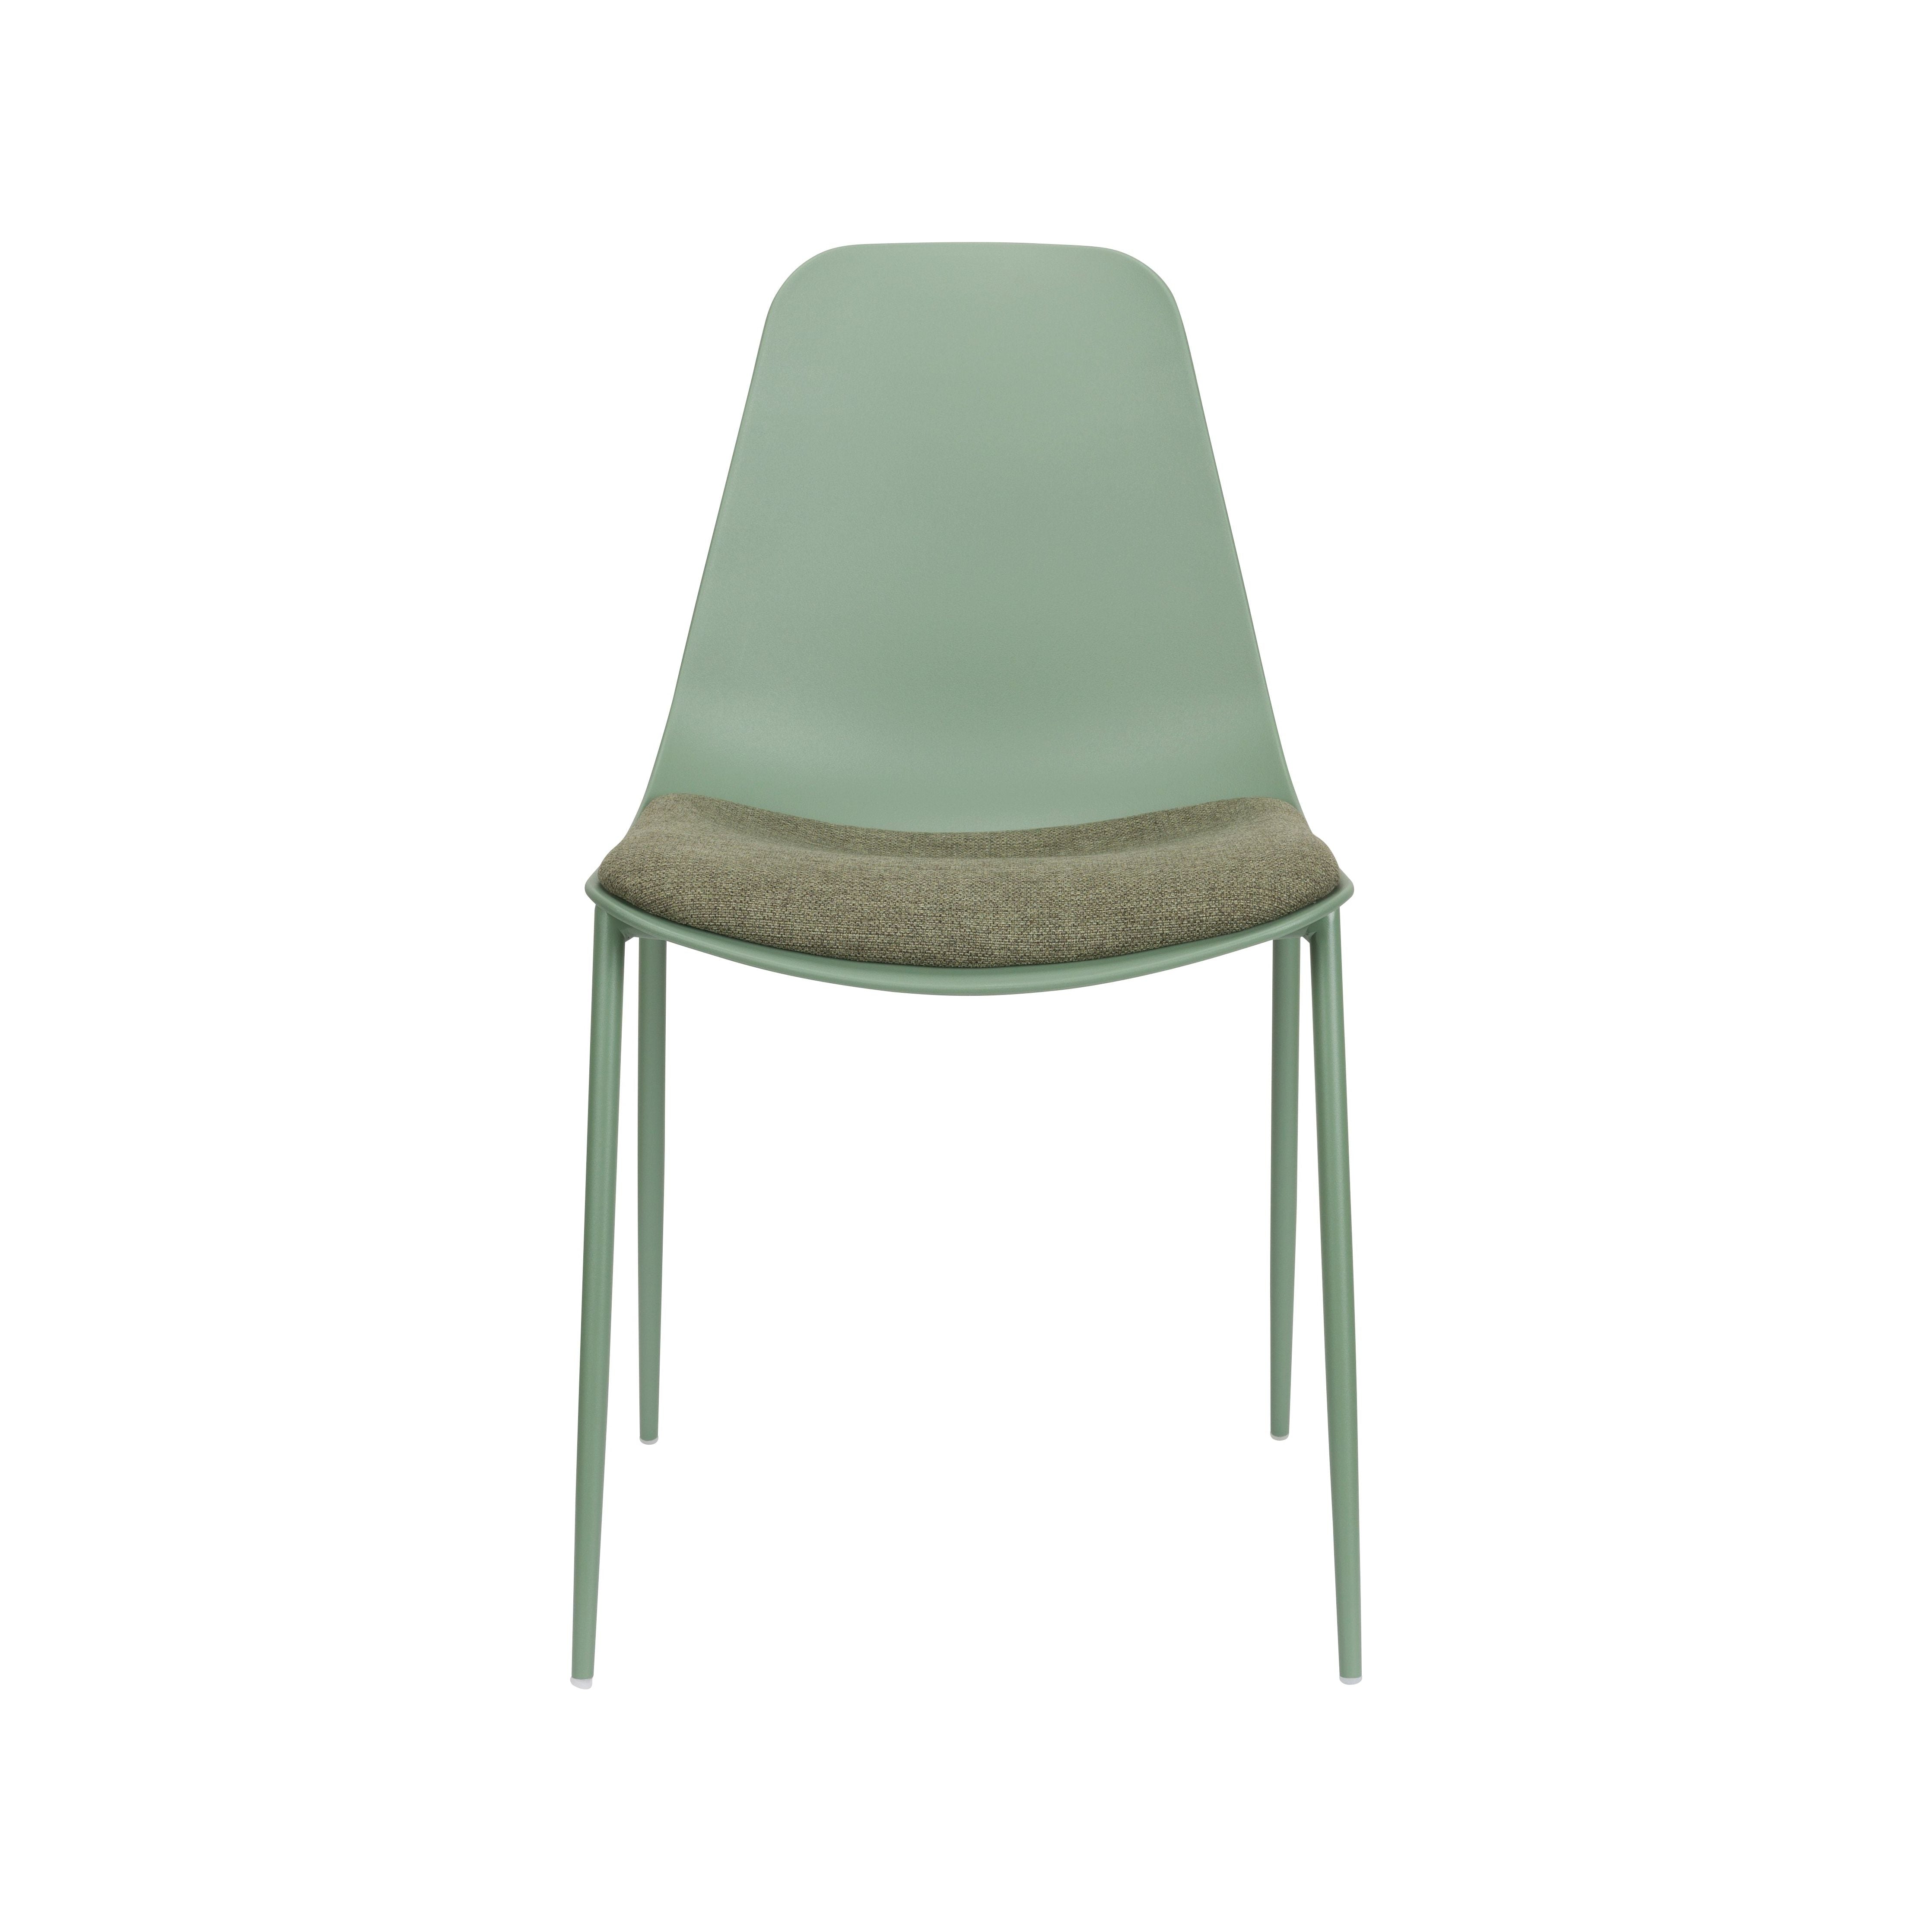 Chair jeffrey green